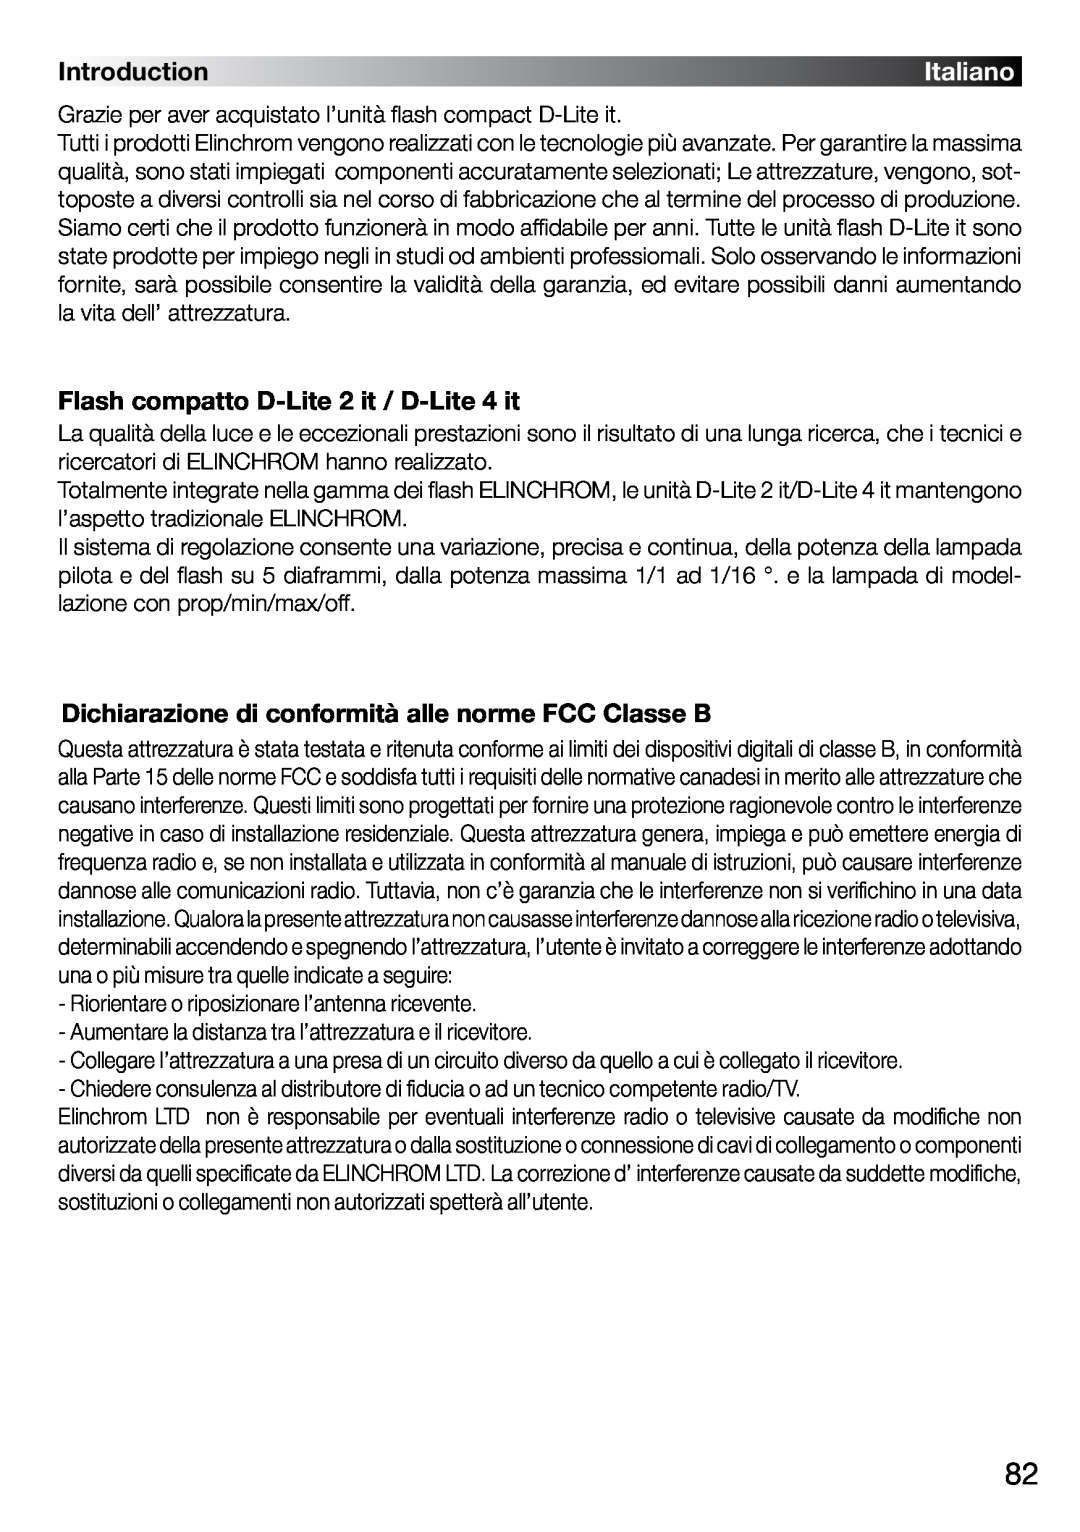 Elinchrom 4 IT, 2 IT operation manual Introduction, Flash compatto D-Lite2 it / D-Lite4 it, Italiano 